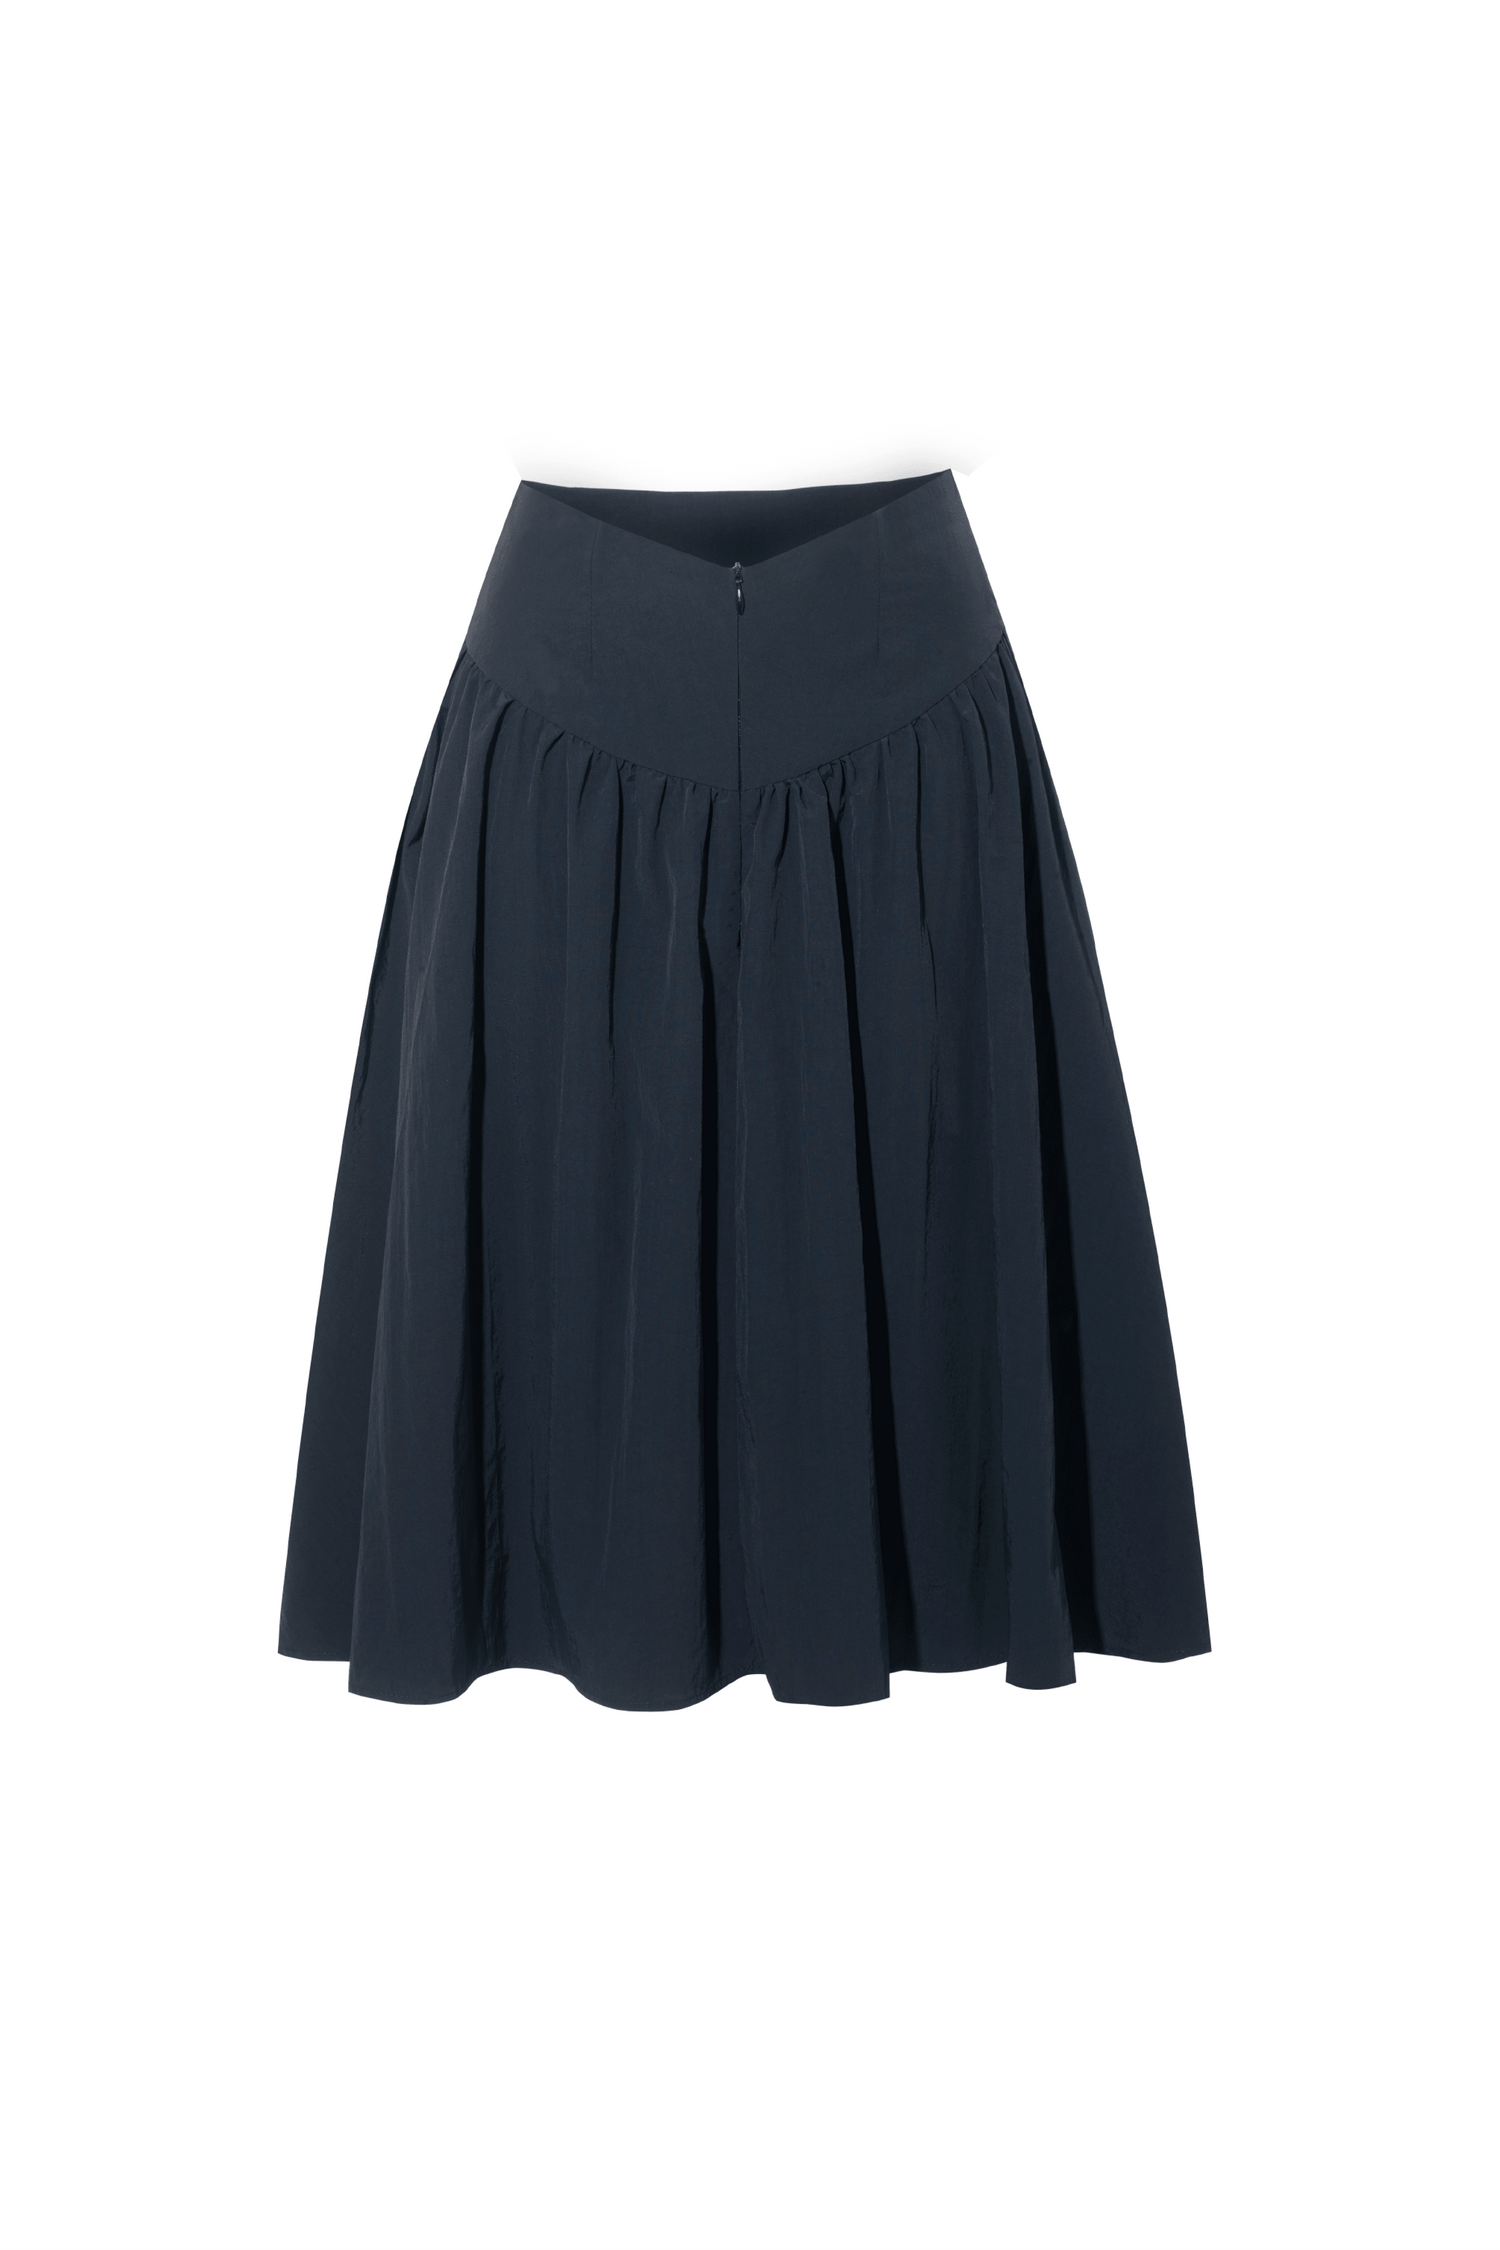 The Deba Midi Skirt, Onyx - Peachy Den